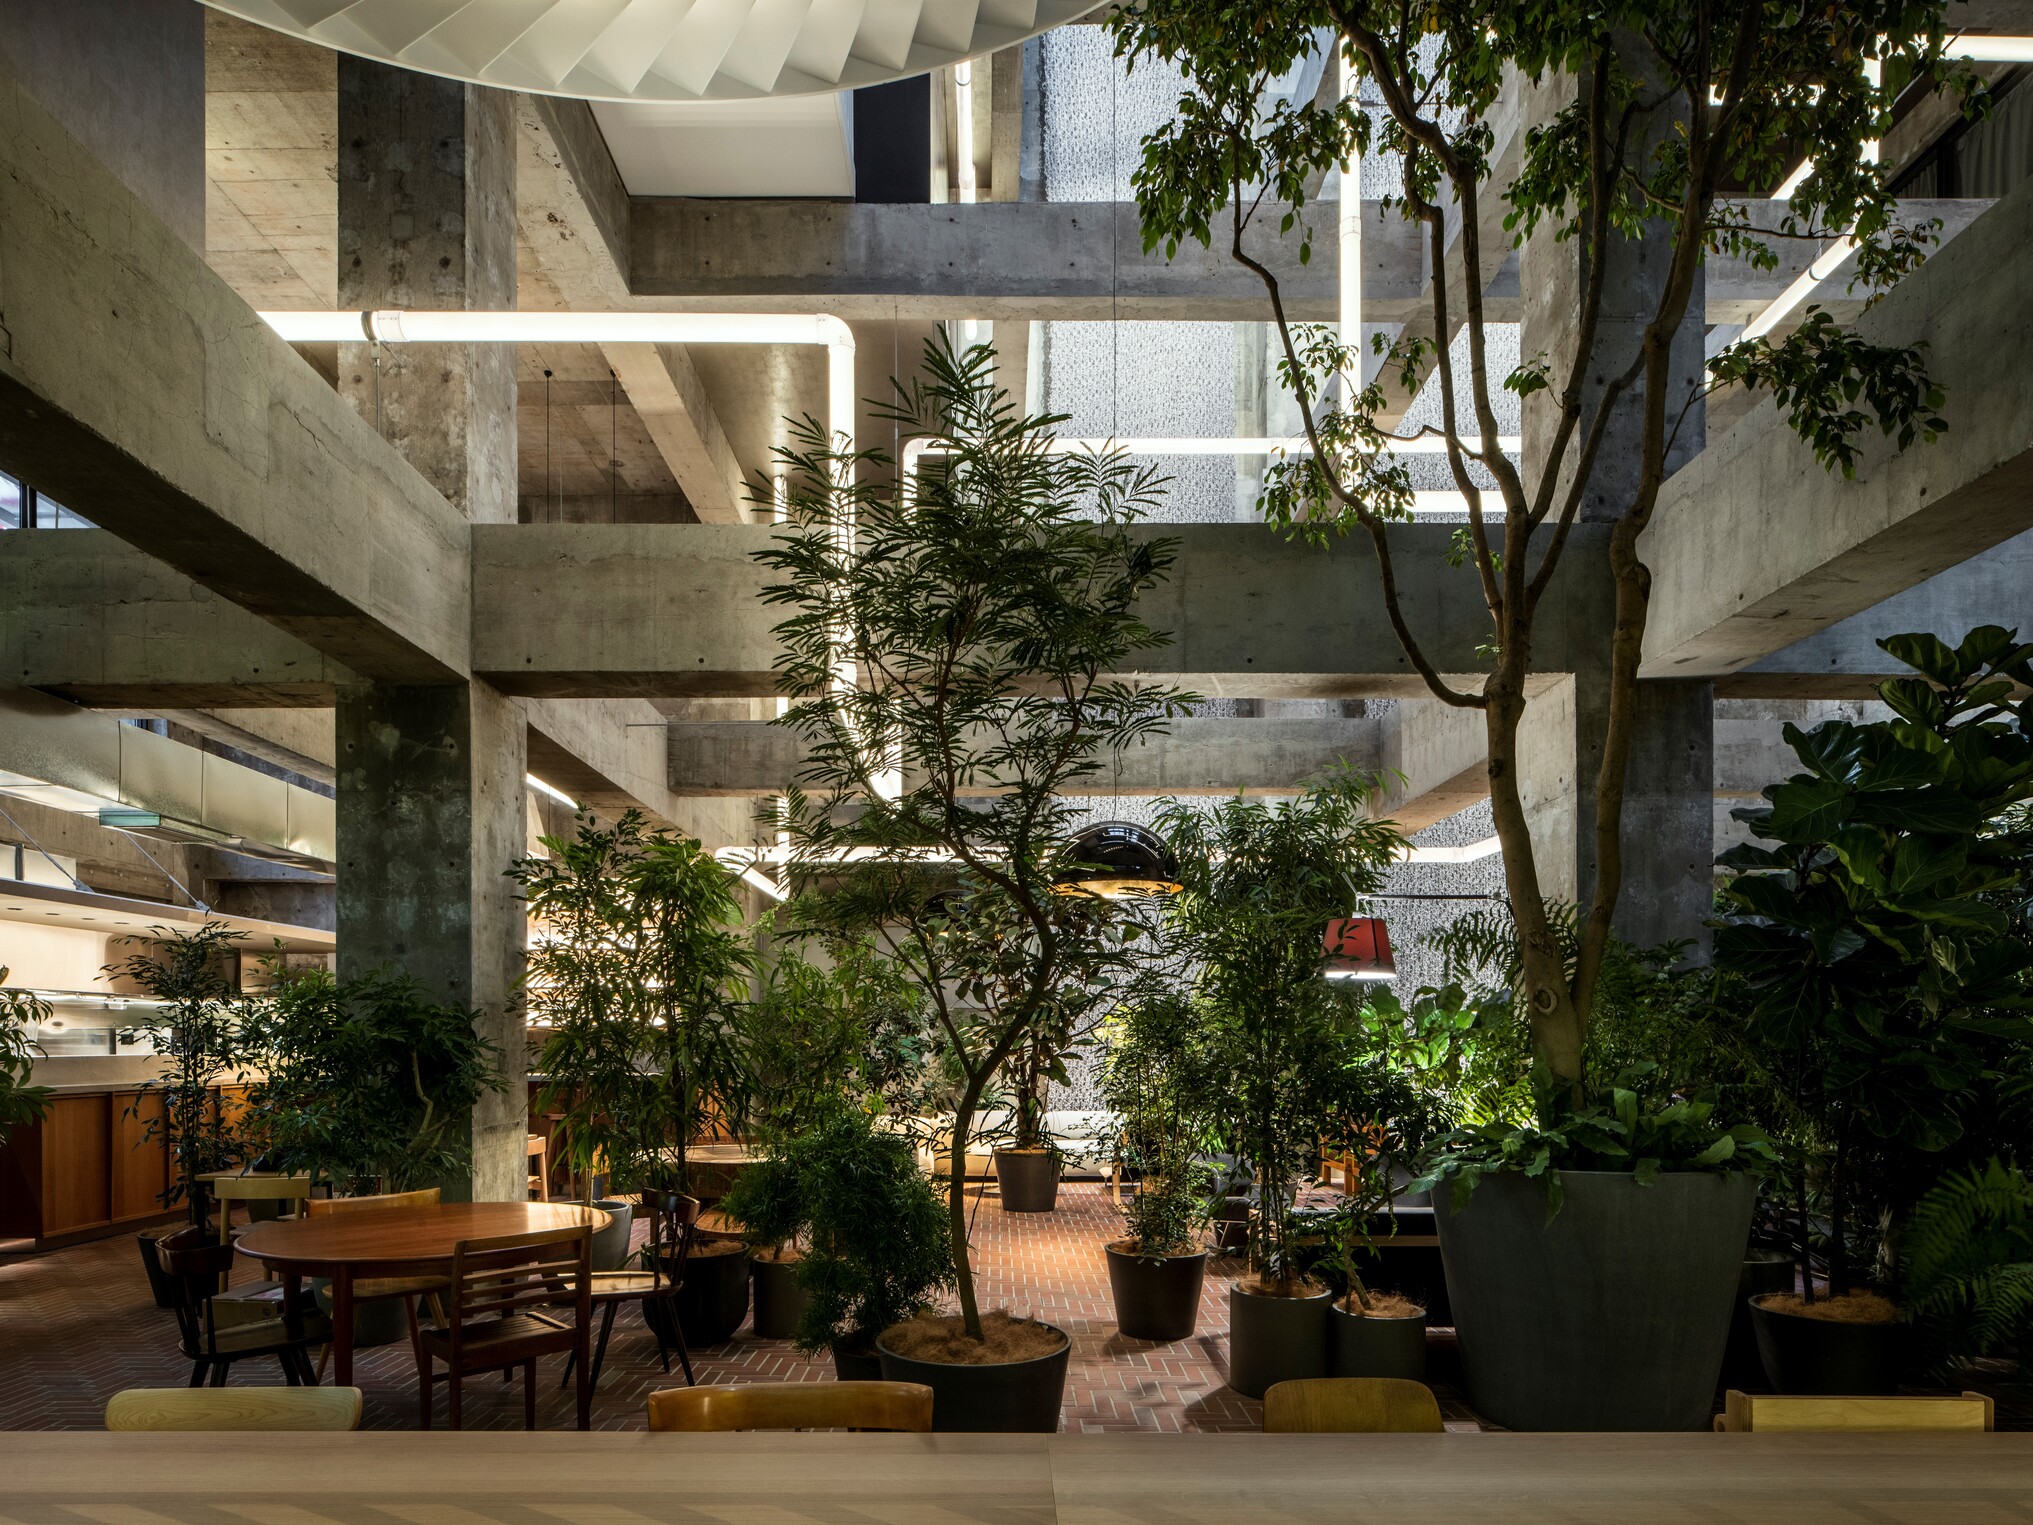 Embrace Nature: Shiroiya Hotel 想像自然，懷抱綠色意境 - 城市裡的綠色山丘旅館